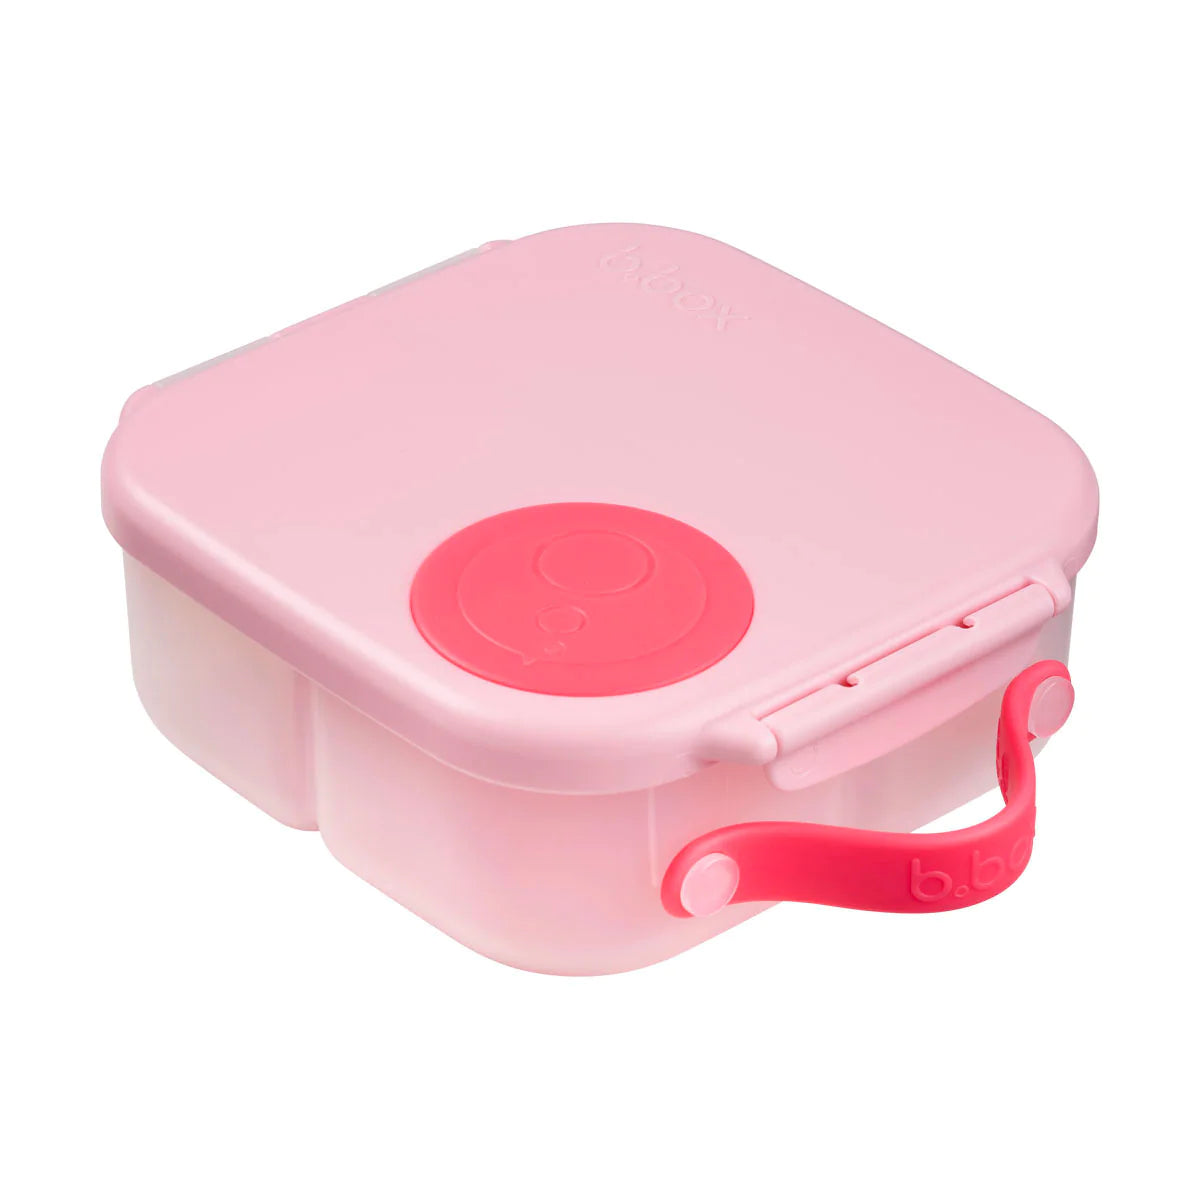 b.box Mini Lunchbox in Flamingo Fizz available at Bear & Moo